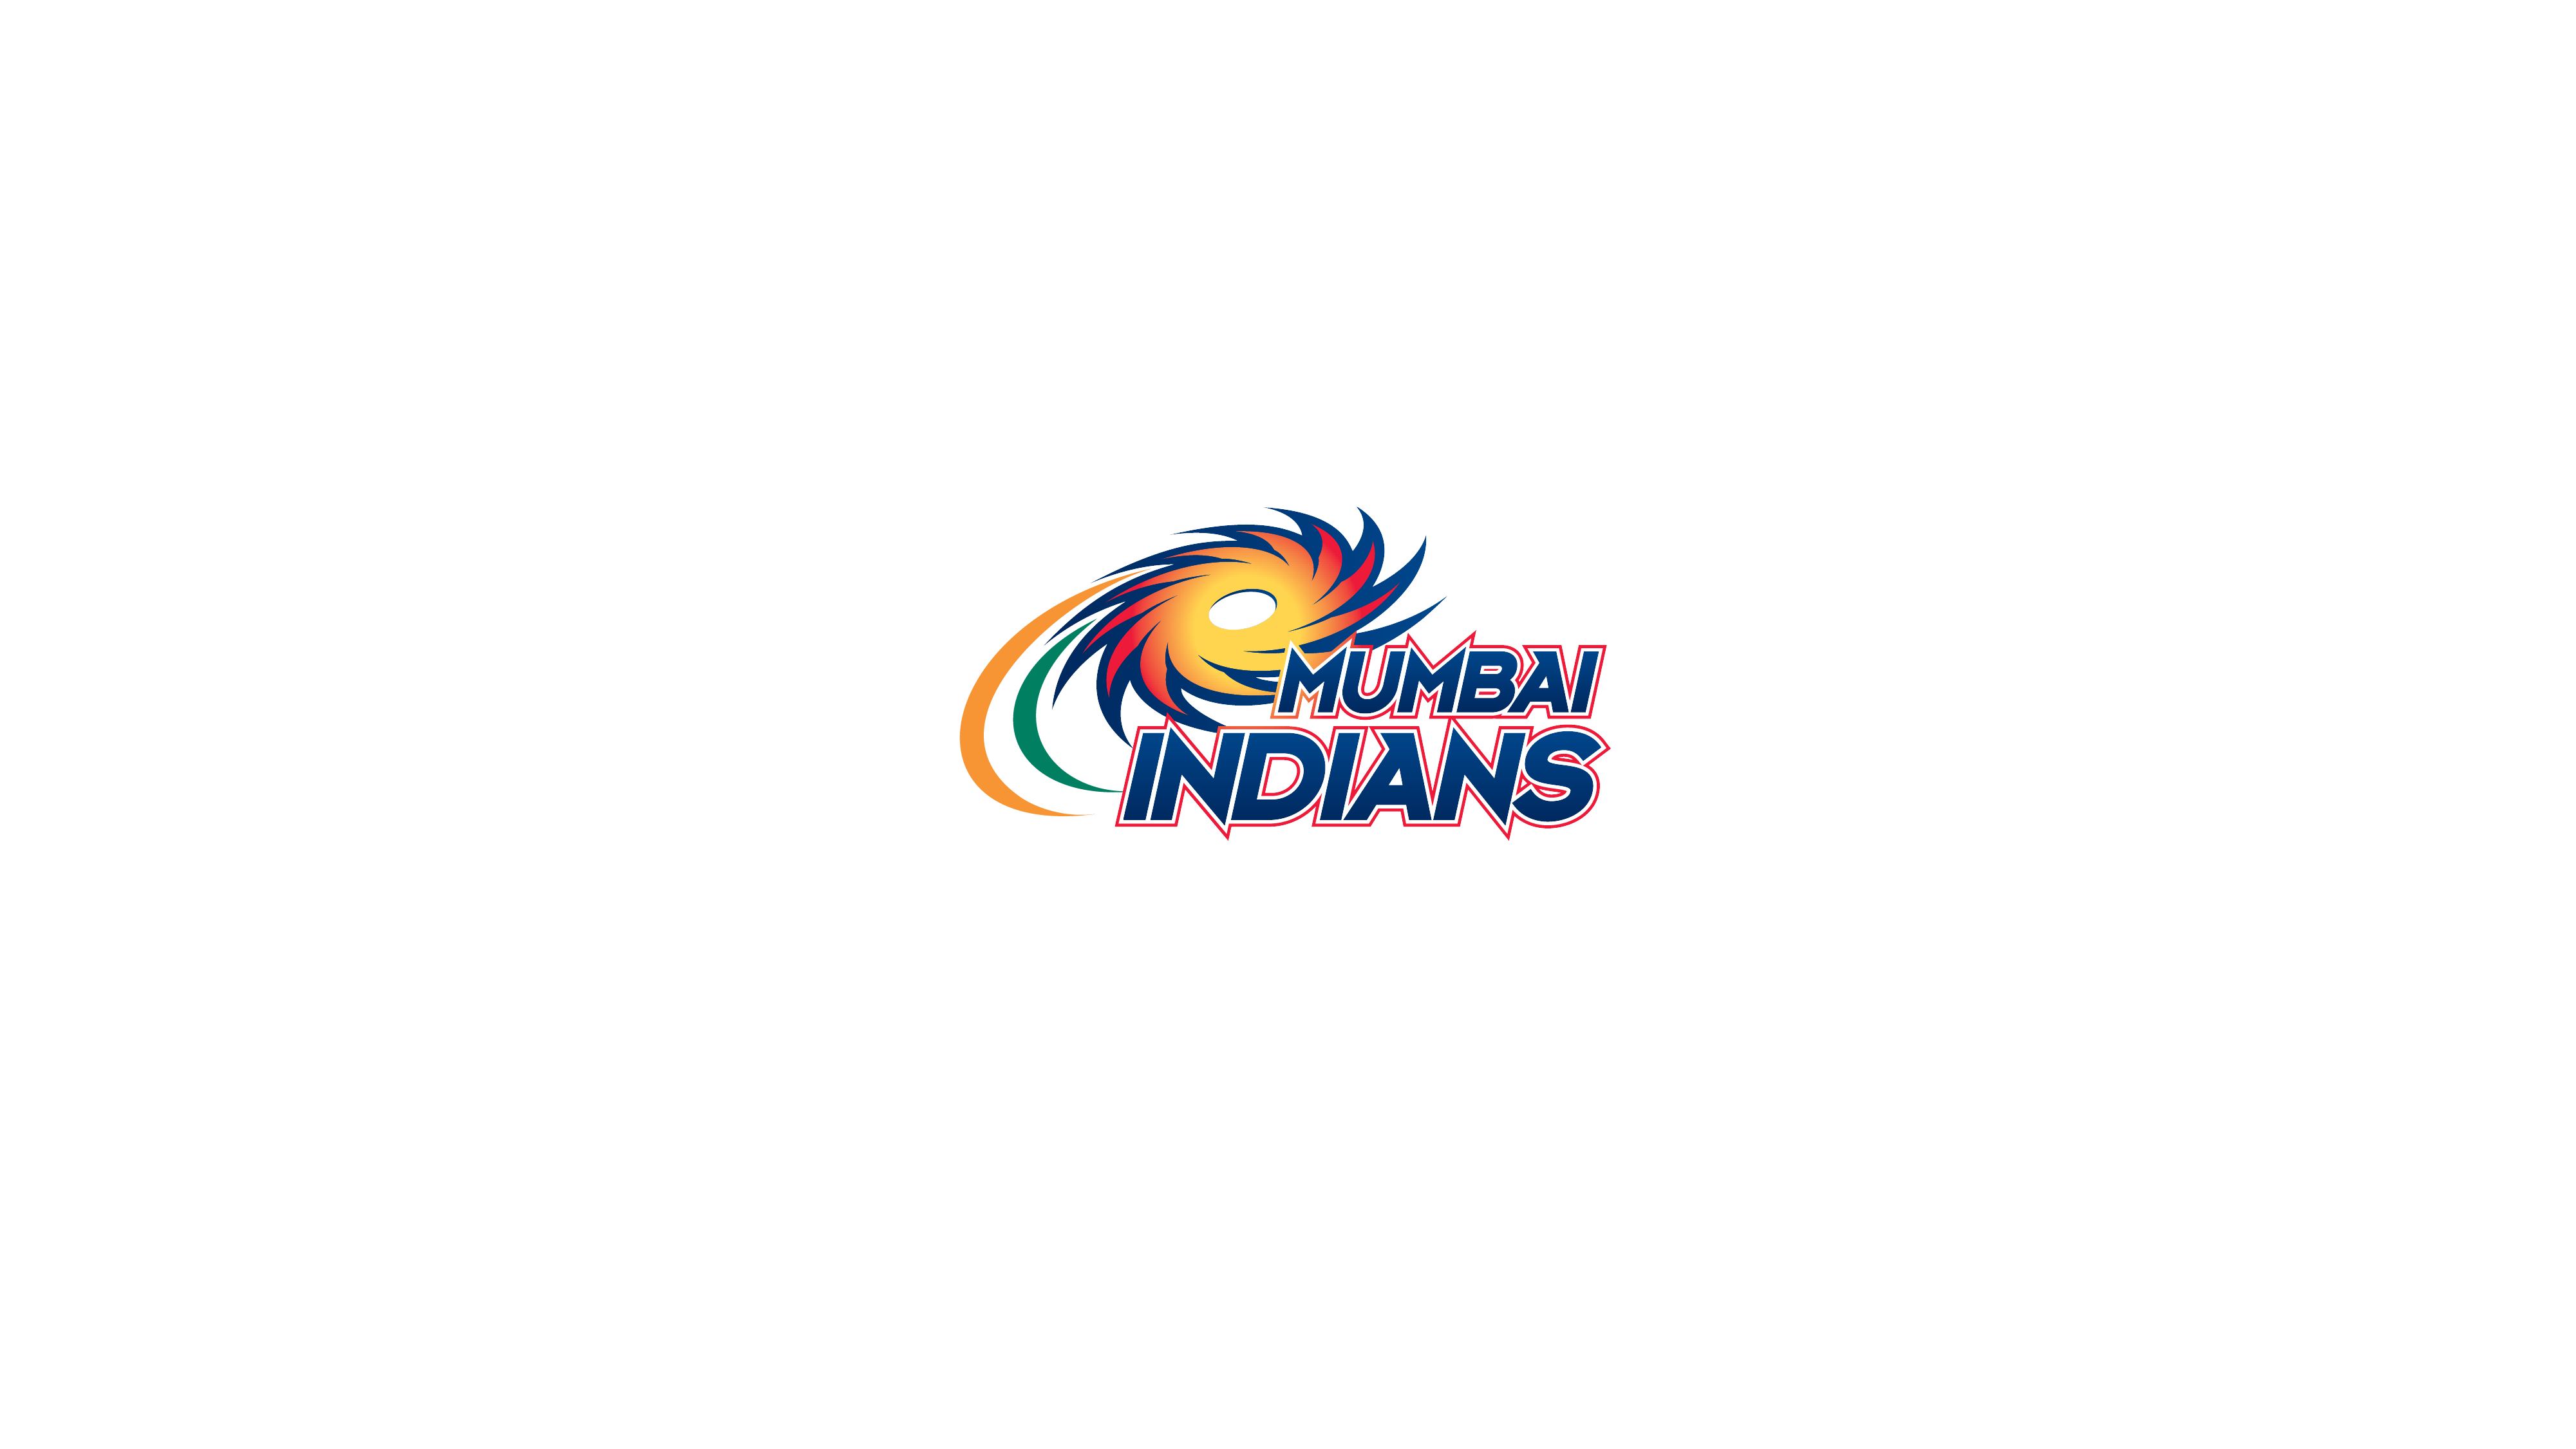 Mumbai Indians Team for IPL 2023 | Schedule 2023, Squad, Players  List,Owner, Captain, Coach,